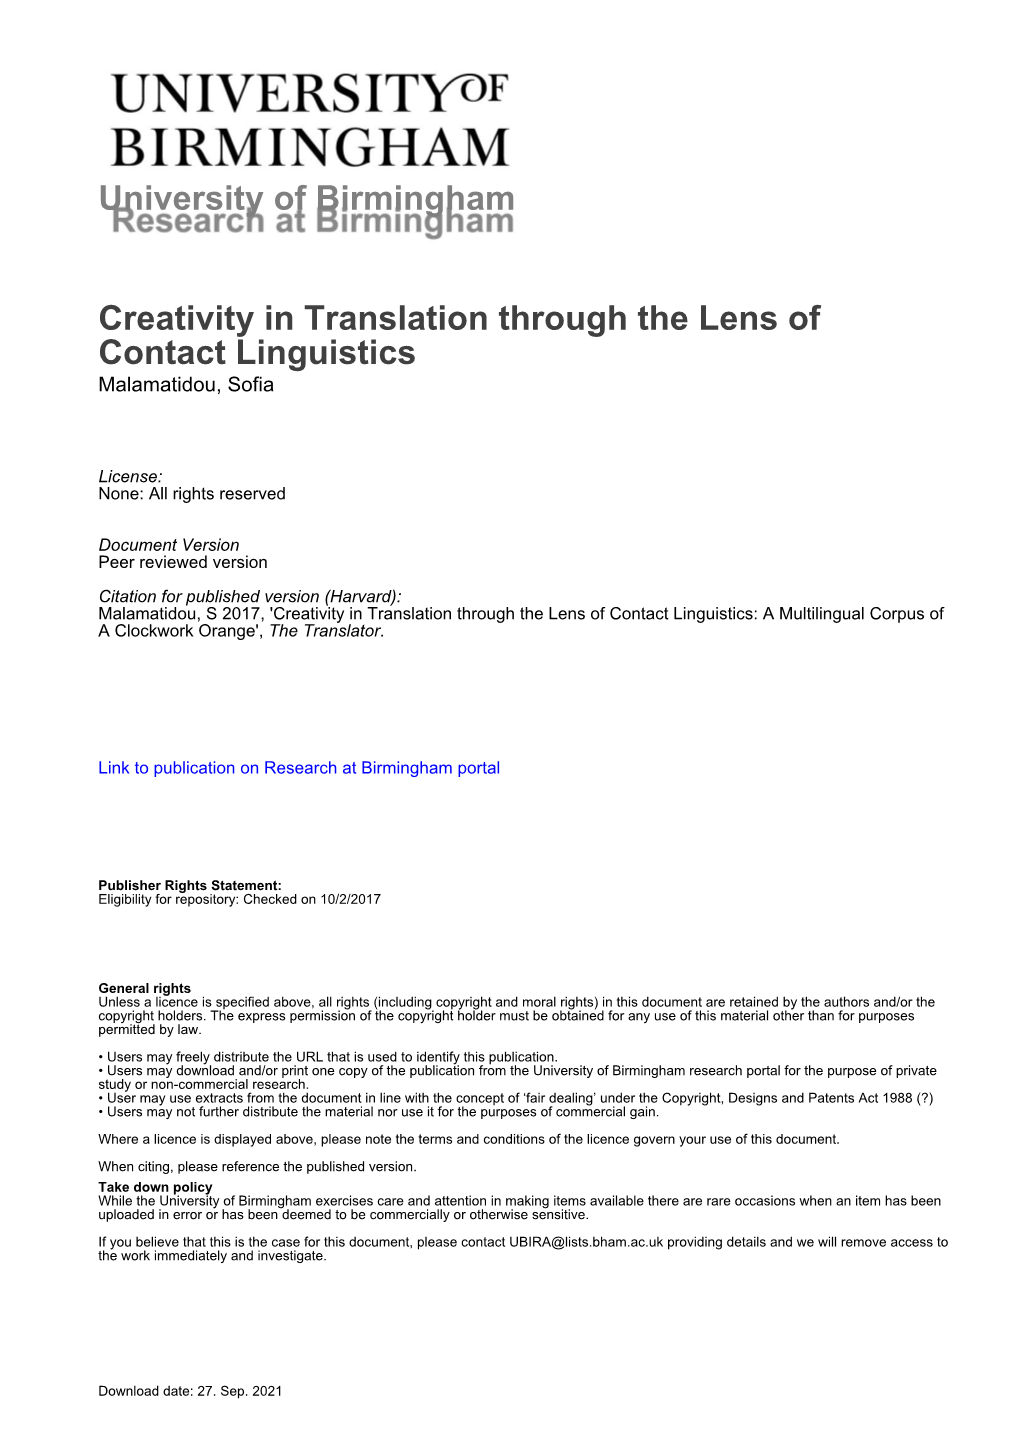 University of Birmingham Creativity in Translation Through the Lens Of